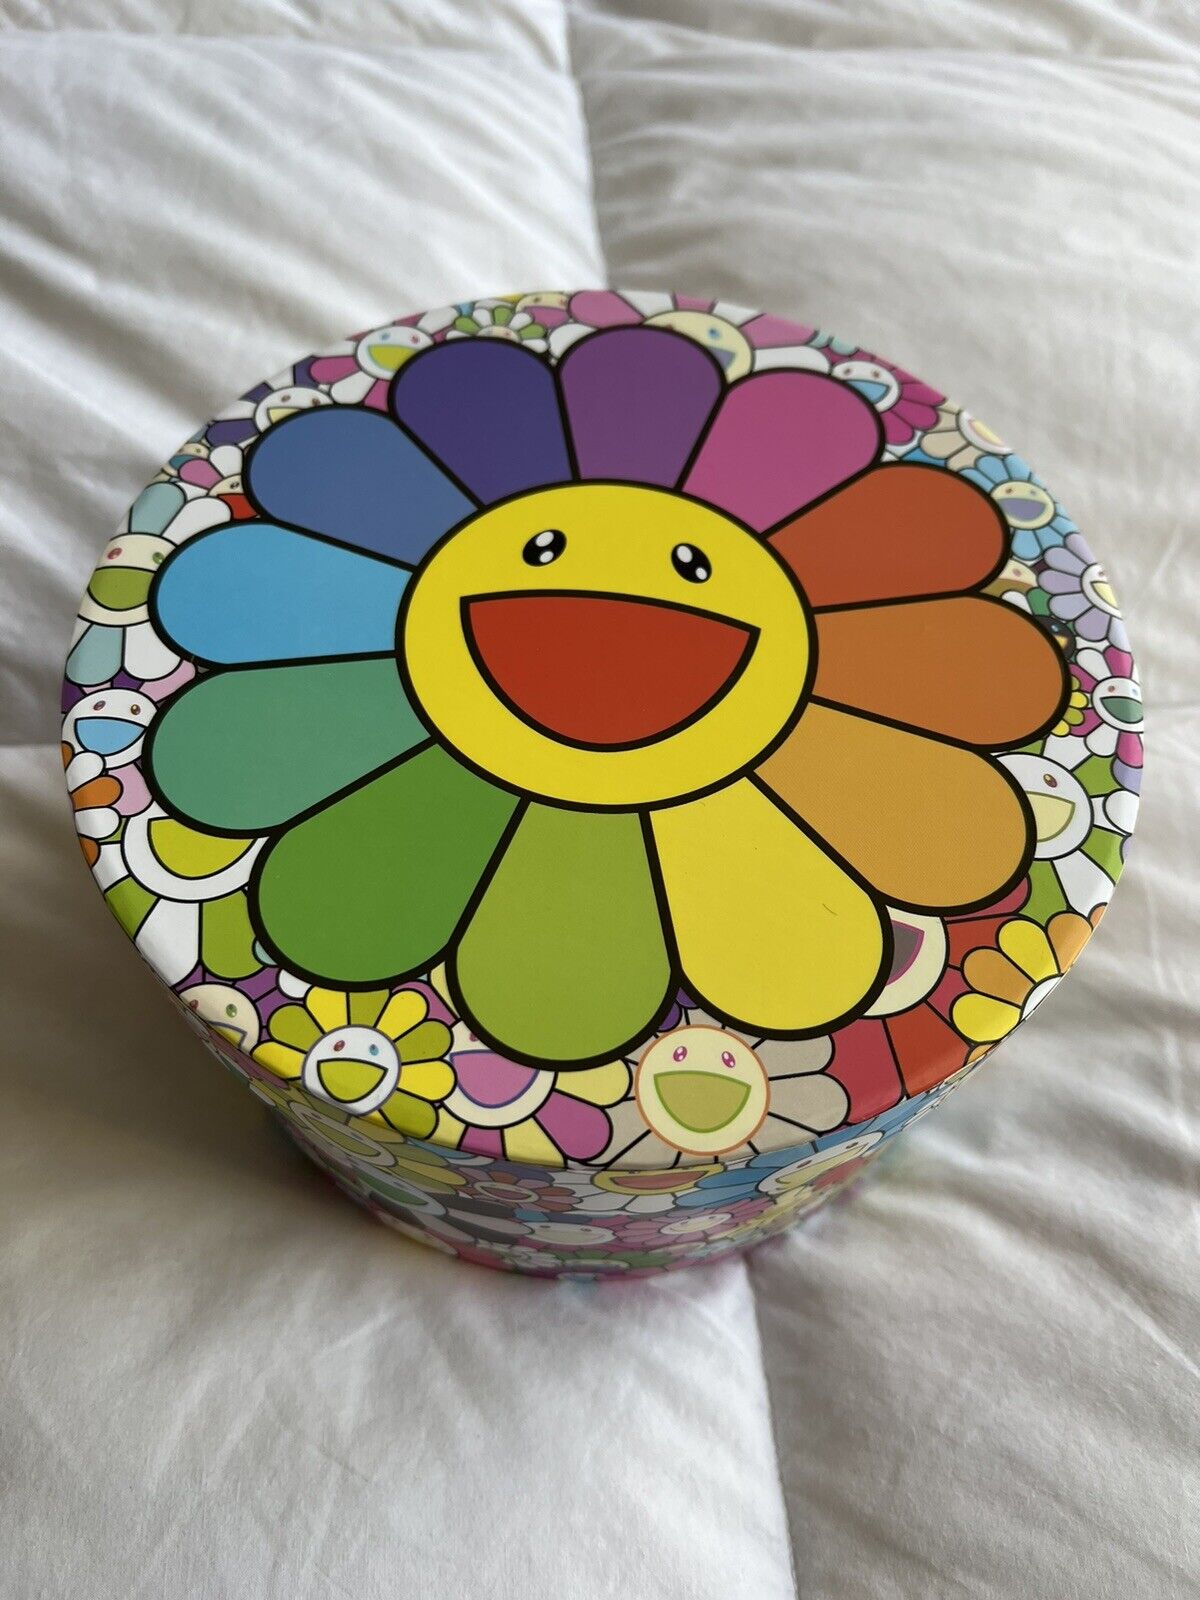 NEW Takashi Murakami x NTWRK Waffle Maker Flower Art Collectible Cookware Hype